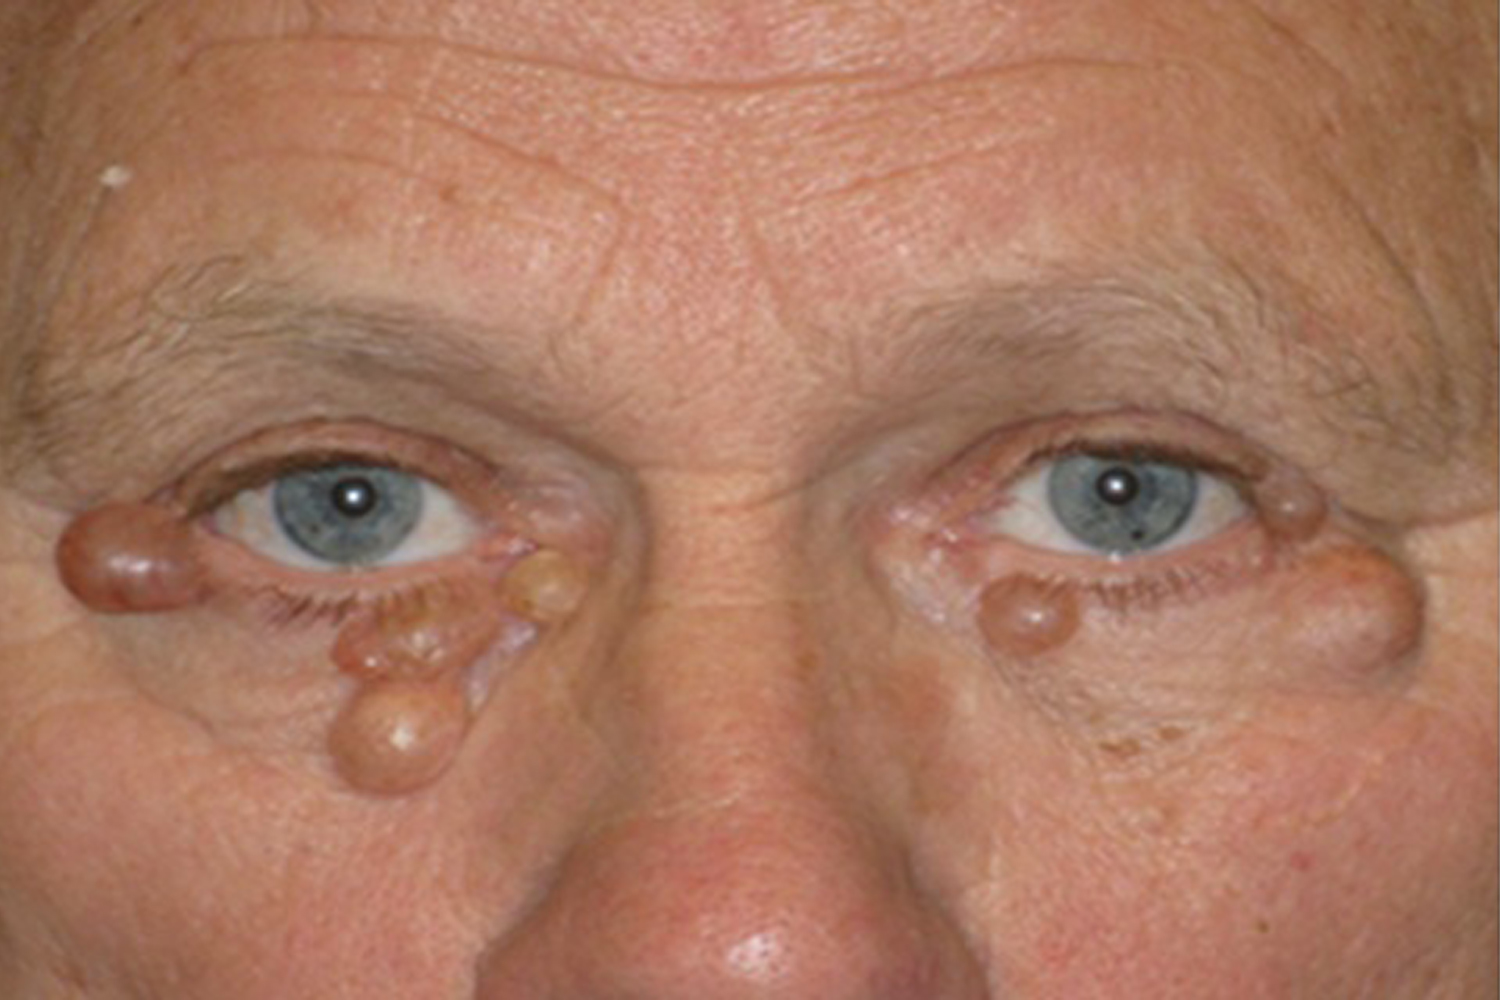 Bilateral Peri-Orbital Skin Lesions